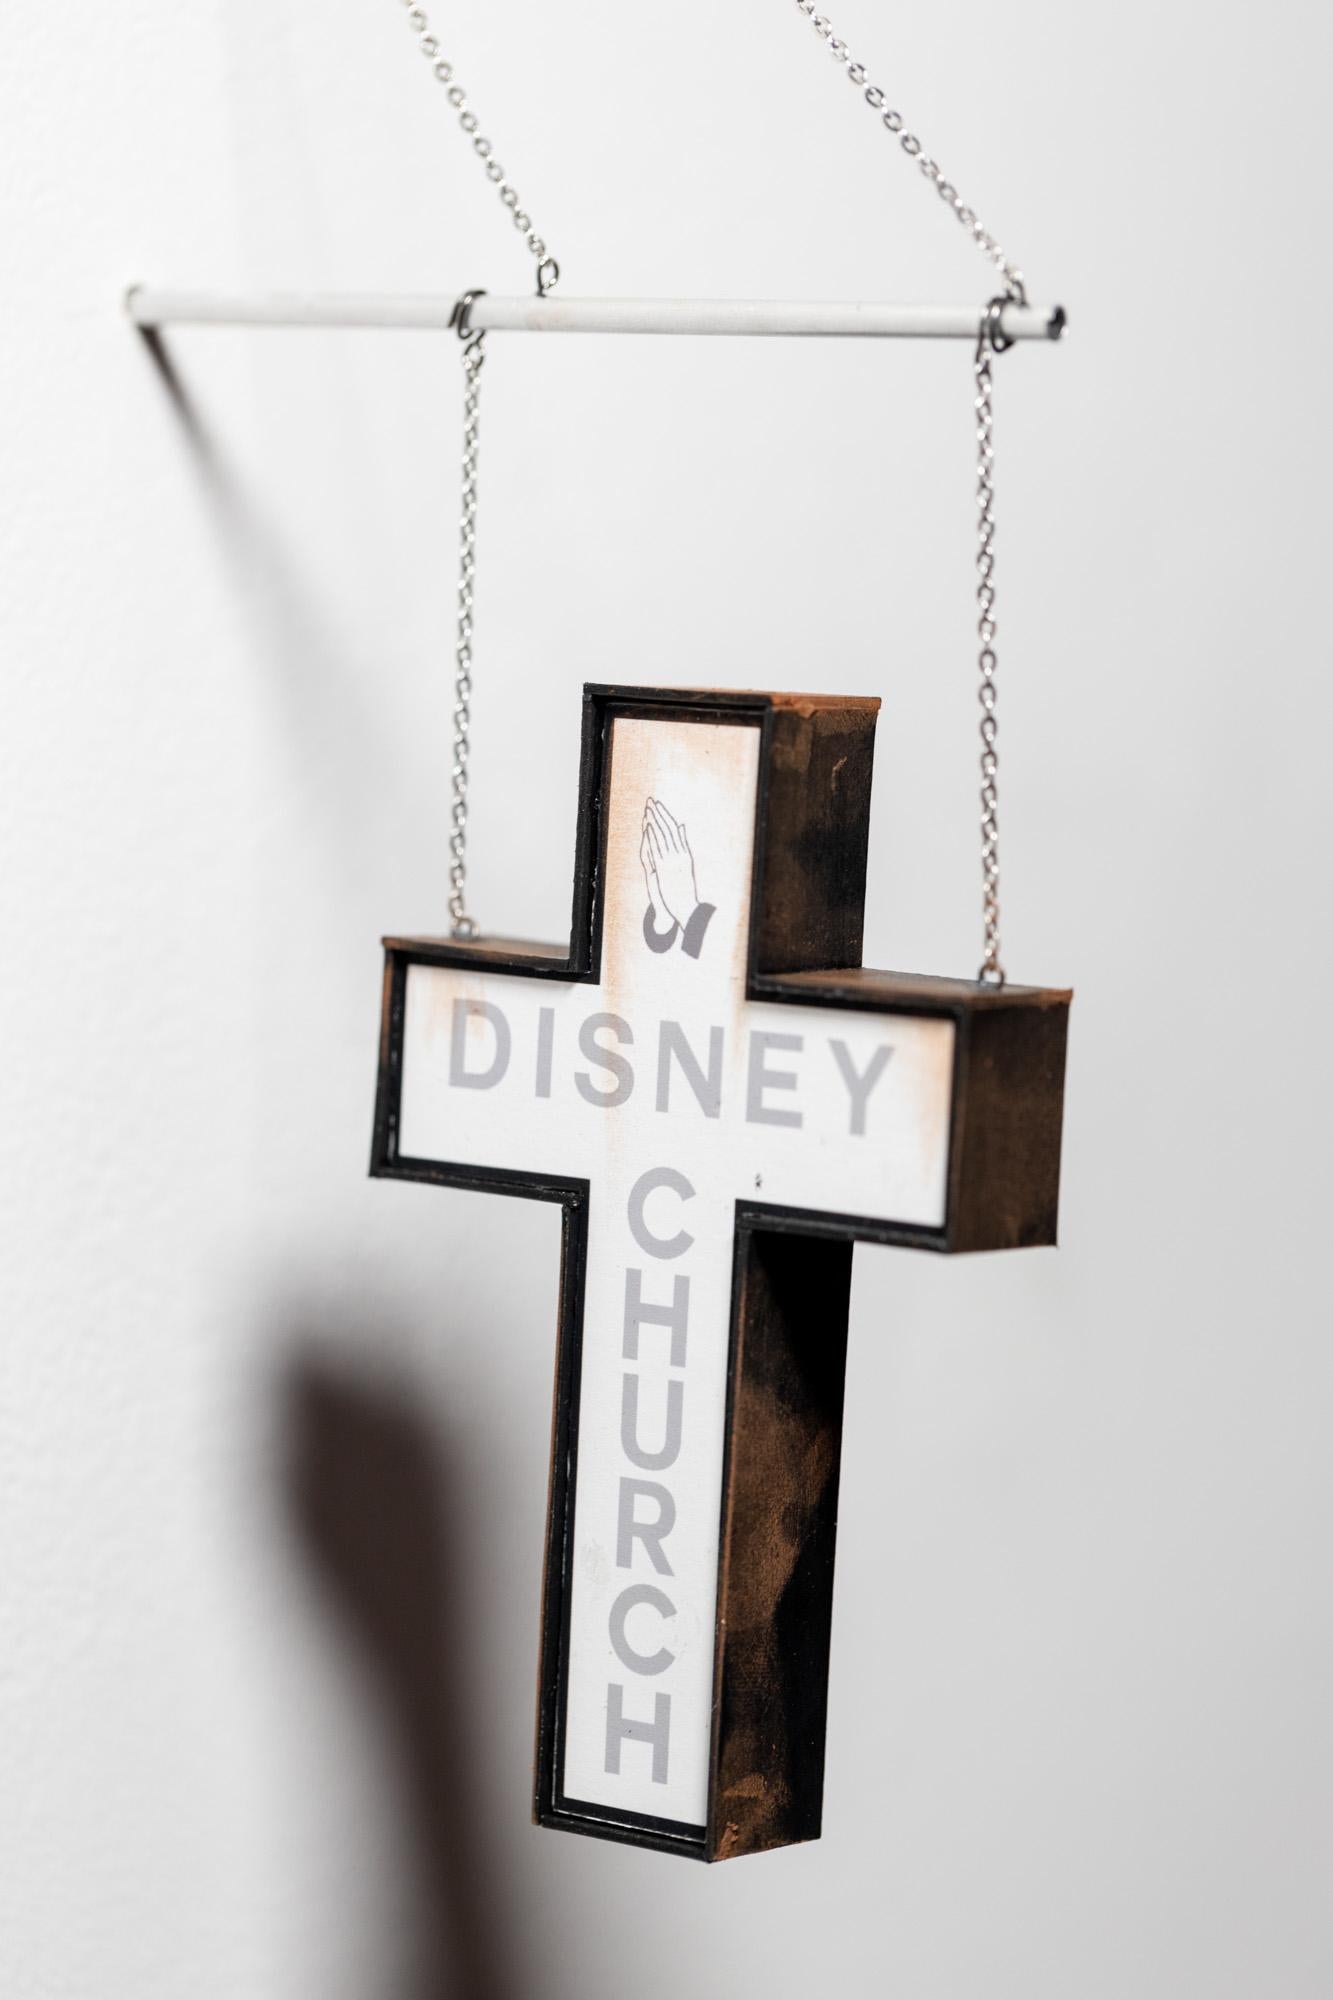 Disney Church - Sculpture by Drew Leshko